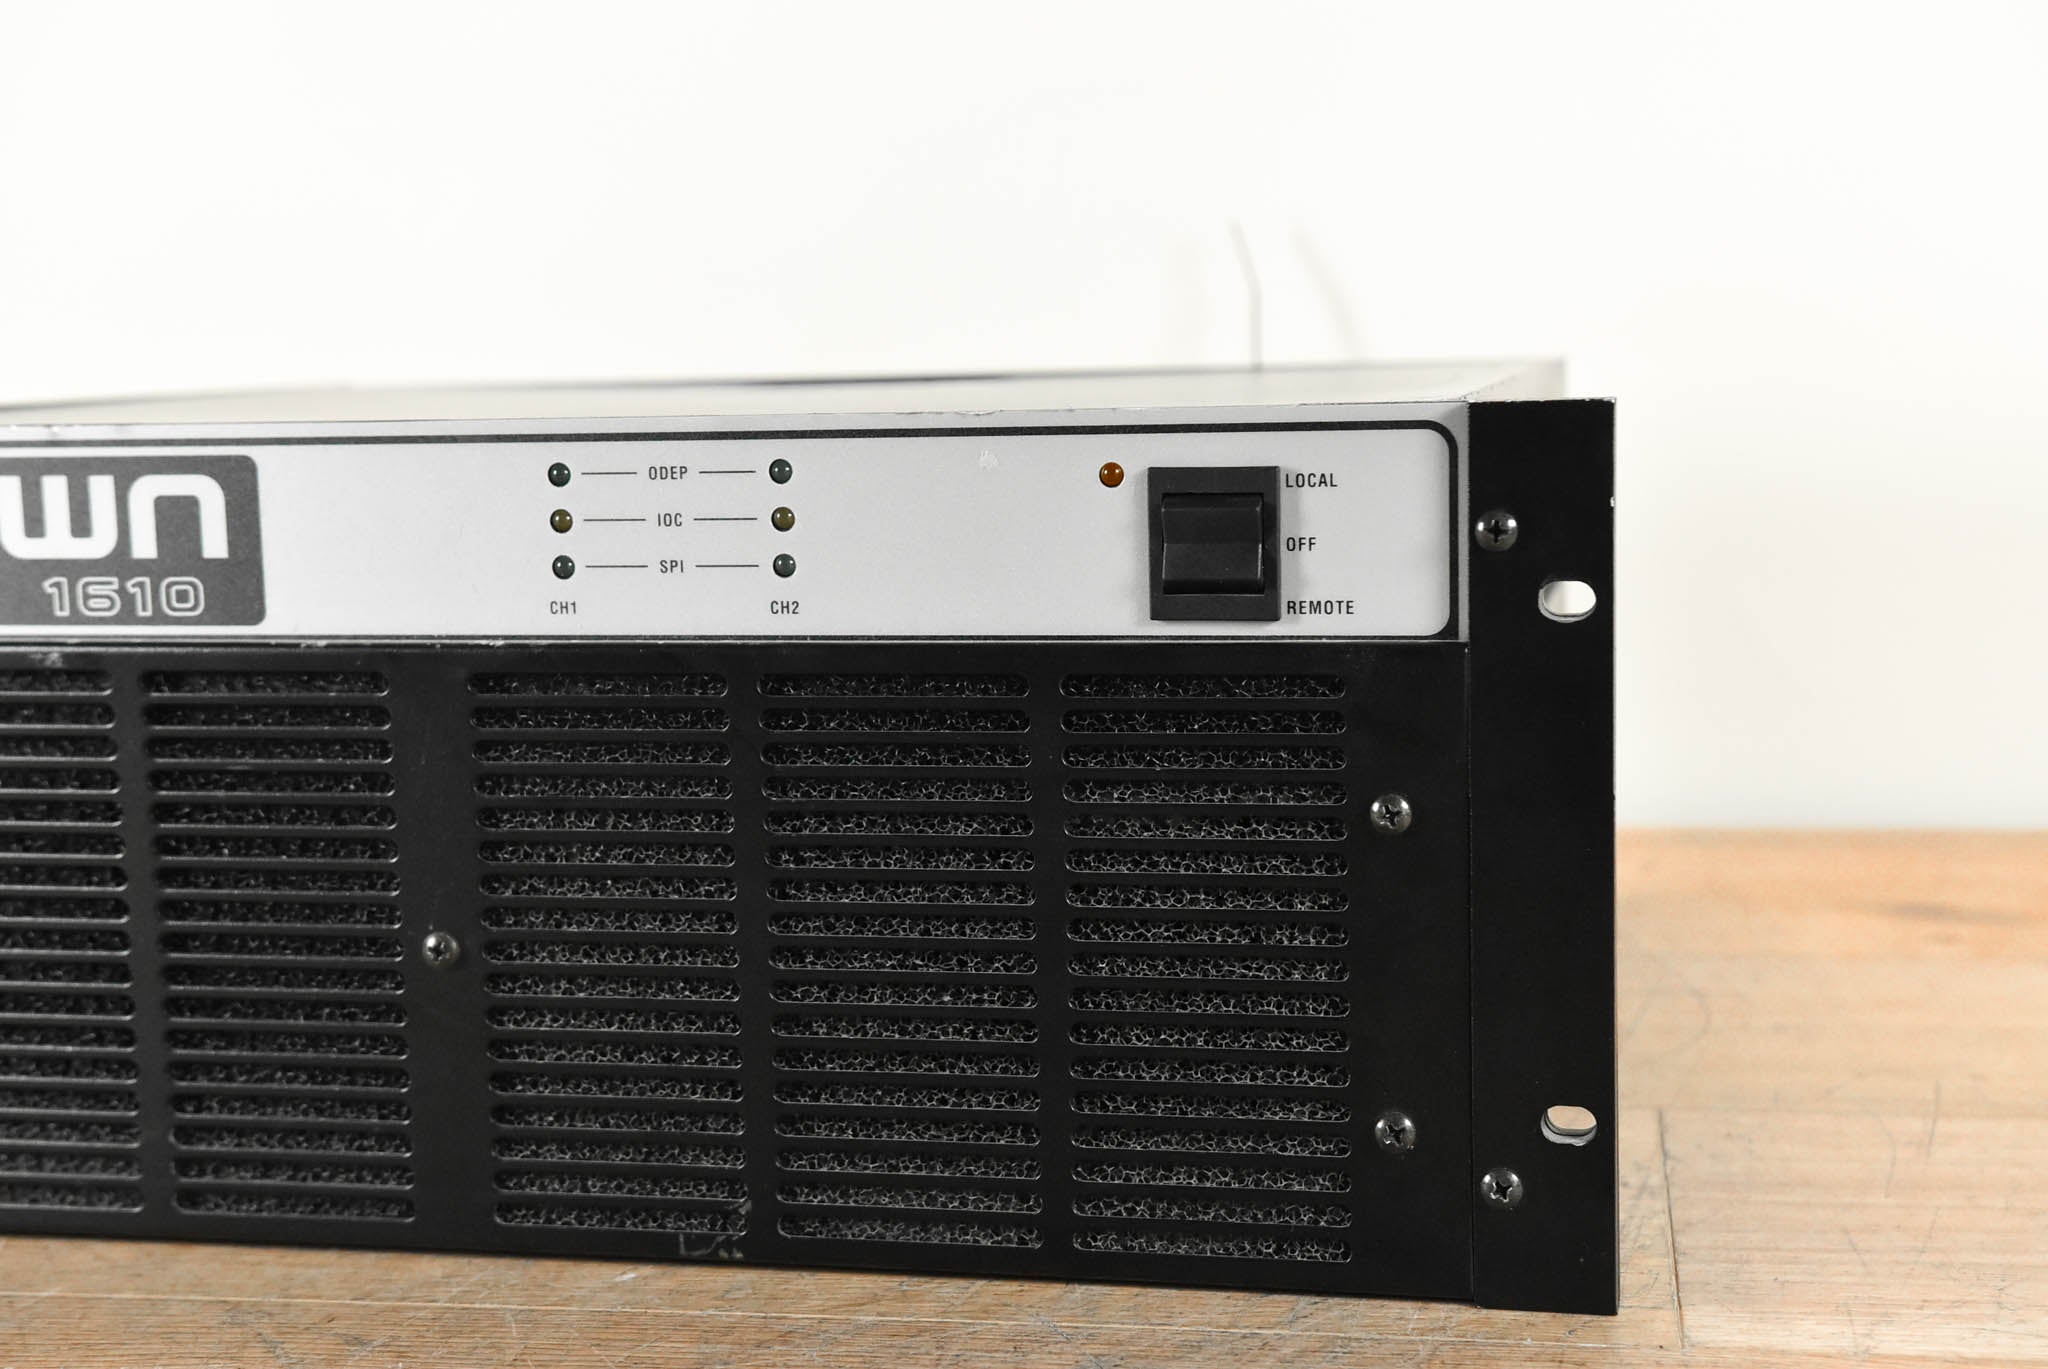 Crown Com-Tech 1610 2-Channel Power Amplifier